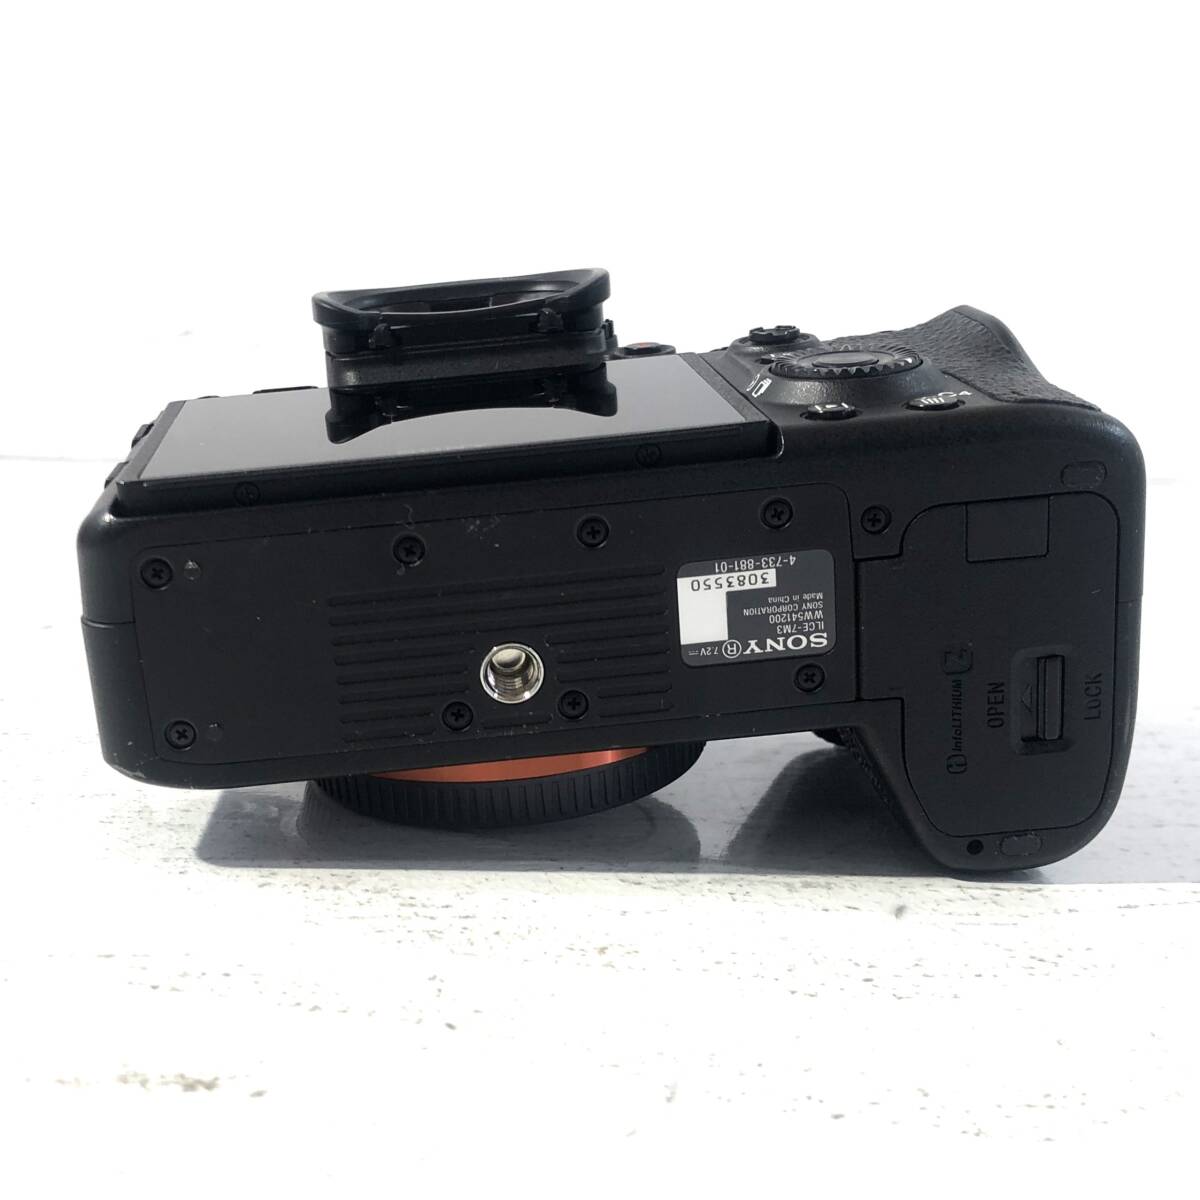 [ б/у /60]SONY α7Ⅲ камера ILCE-7M3 корпус прекрасный товар 2018 год производства 